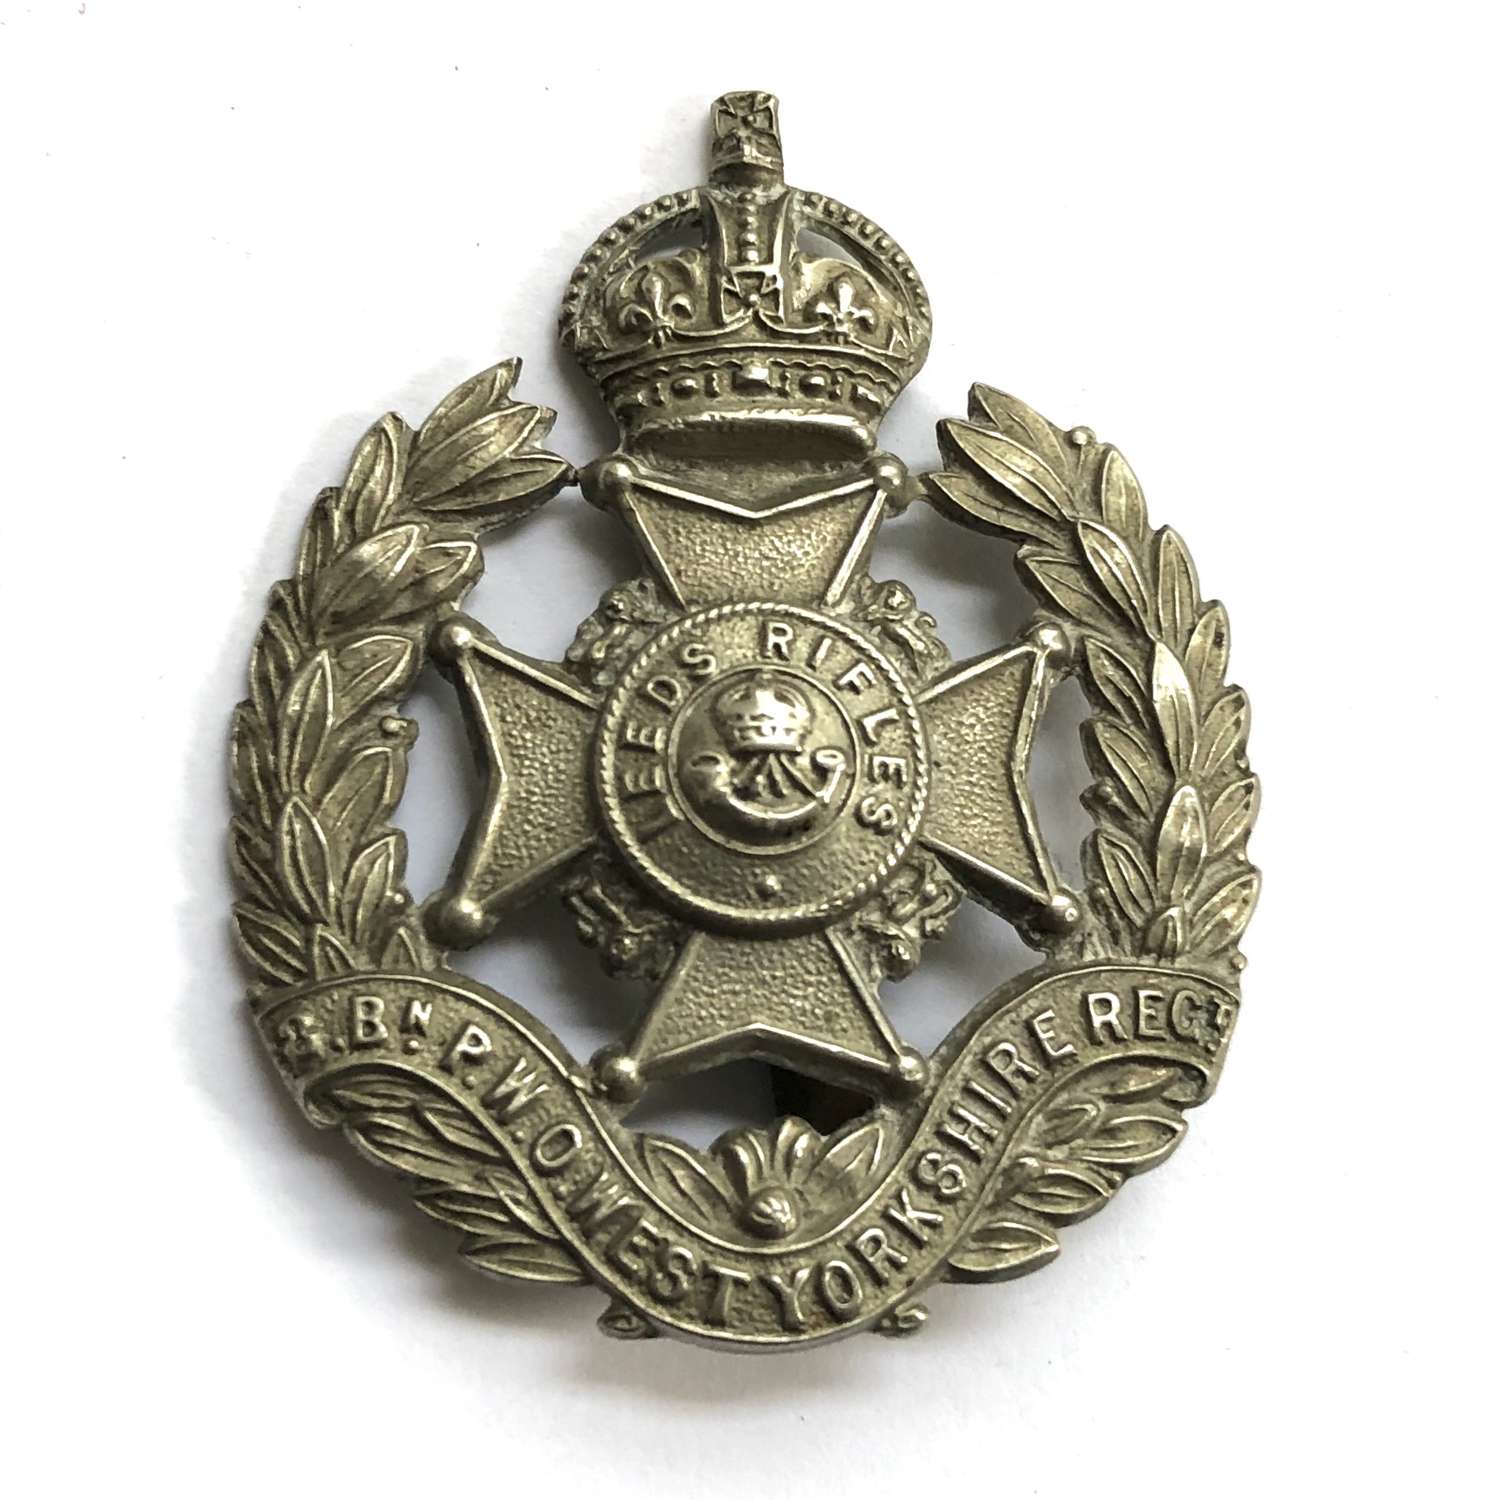 8th Bn West Yorks (Leeds Rifles) post 1908 cap badge